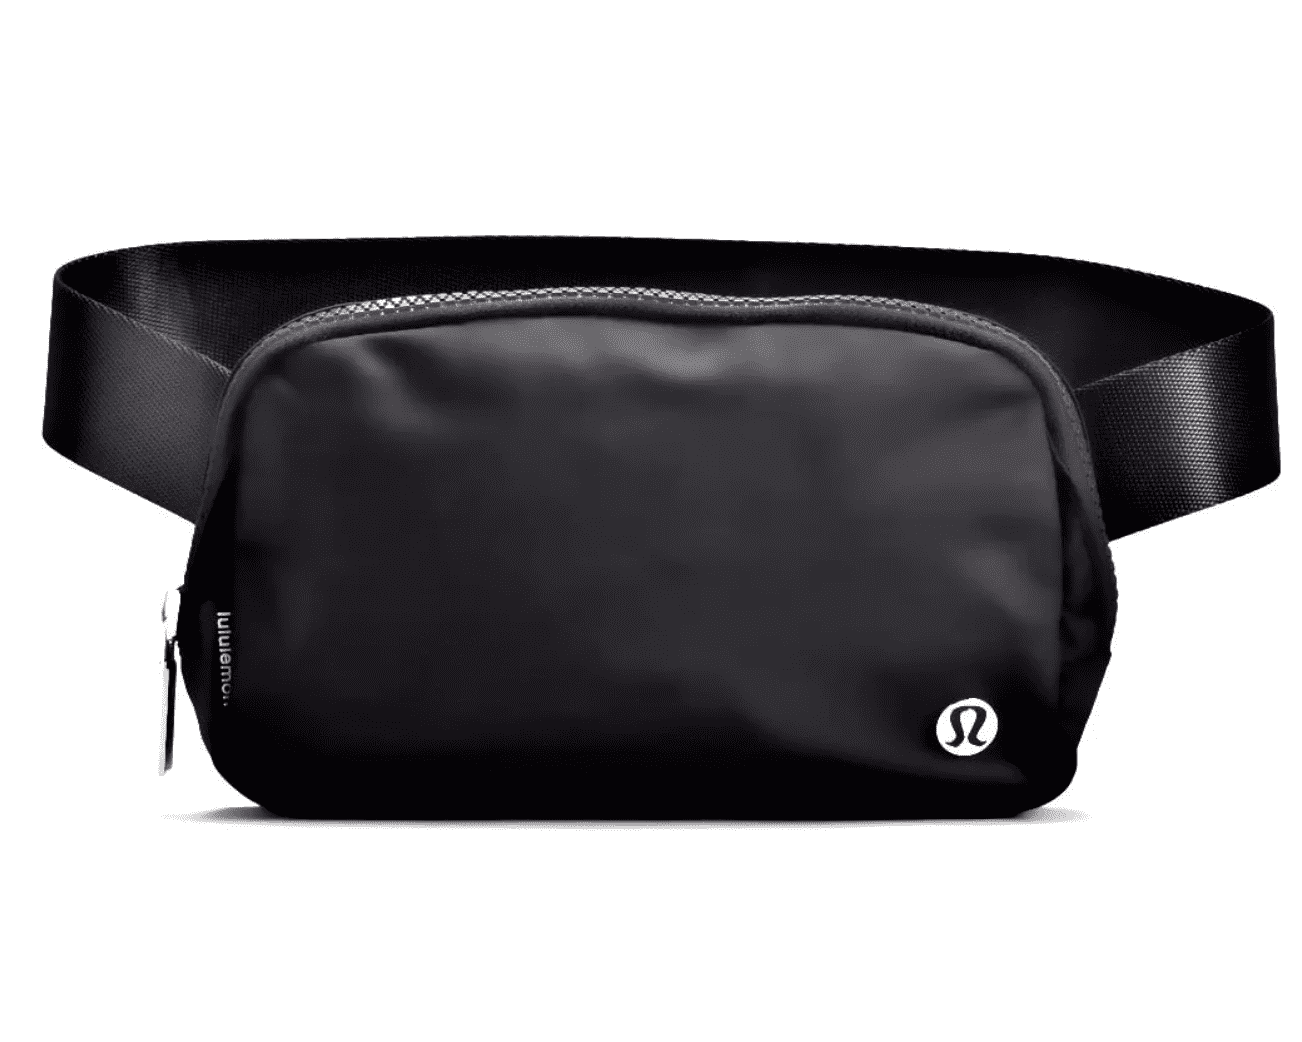 Lululemon Athletica Everywhere Belt Bag, Black, 7.5 x 5 x 2 Inches, Women's, Size: One Size